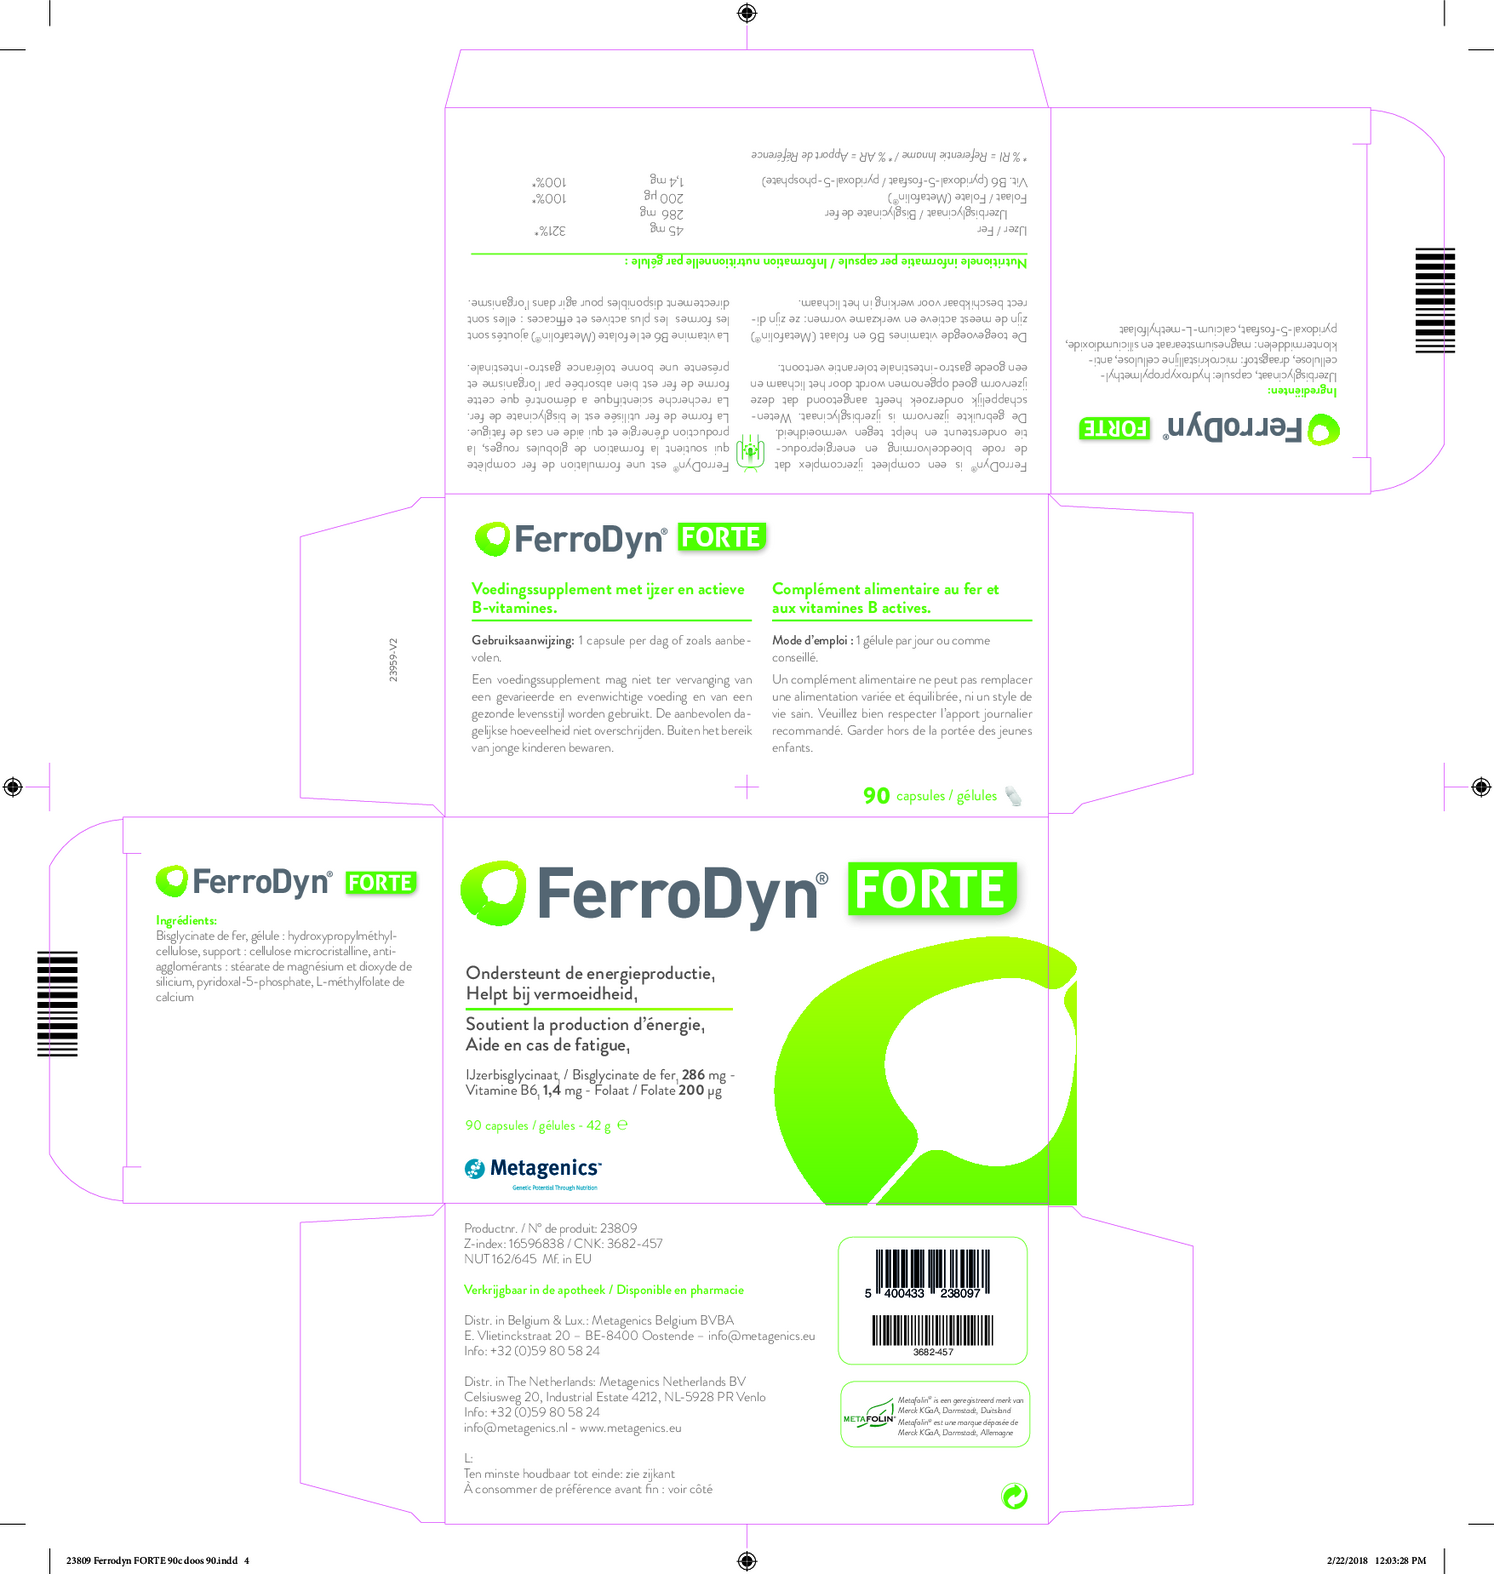 FerroDyn Forte Capsules afbeelding van document #1, etiket